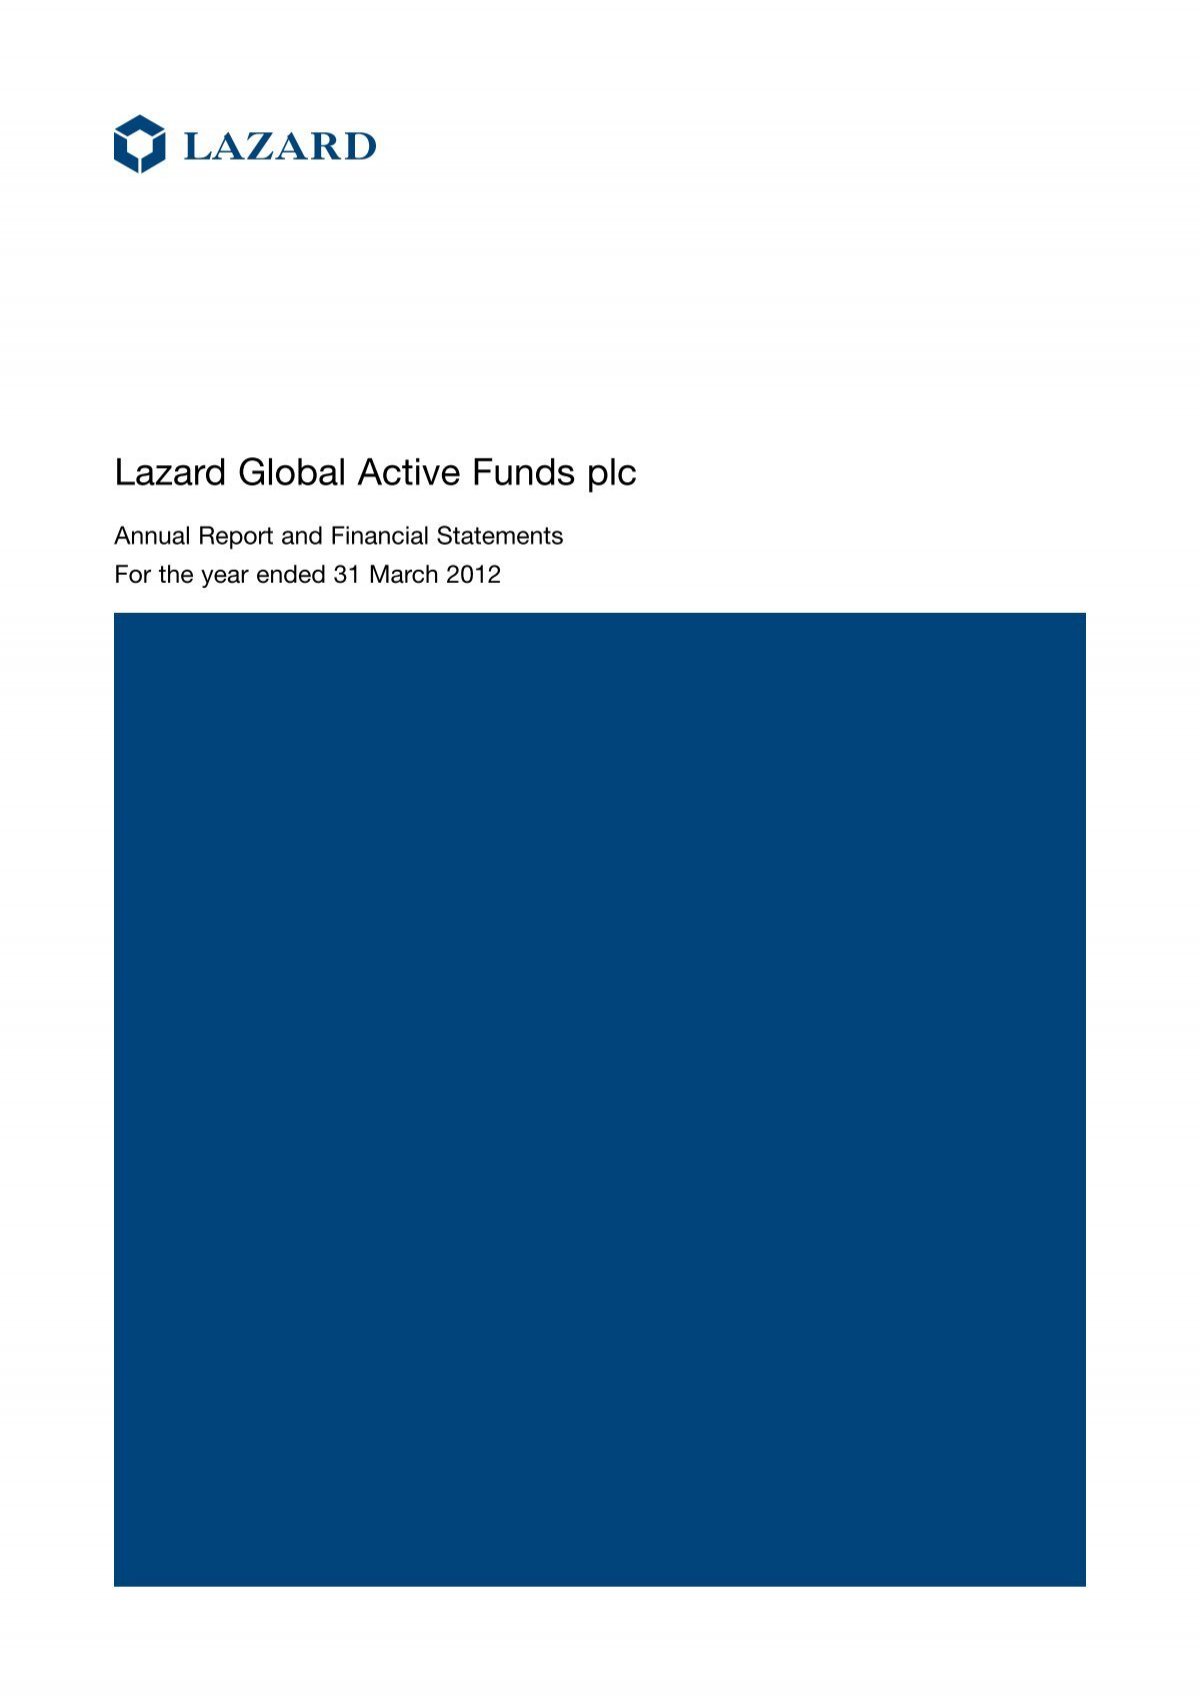 Lazard Global Funds plc